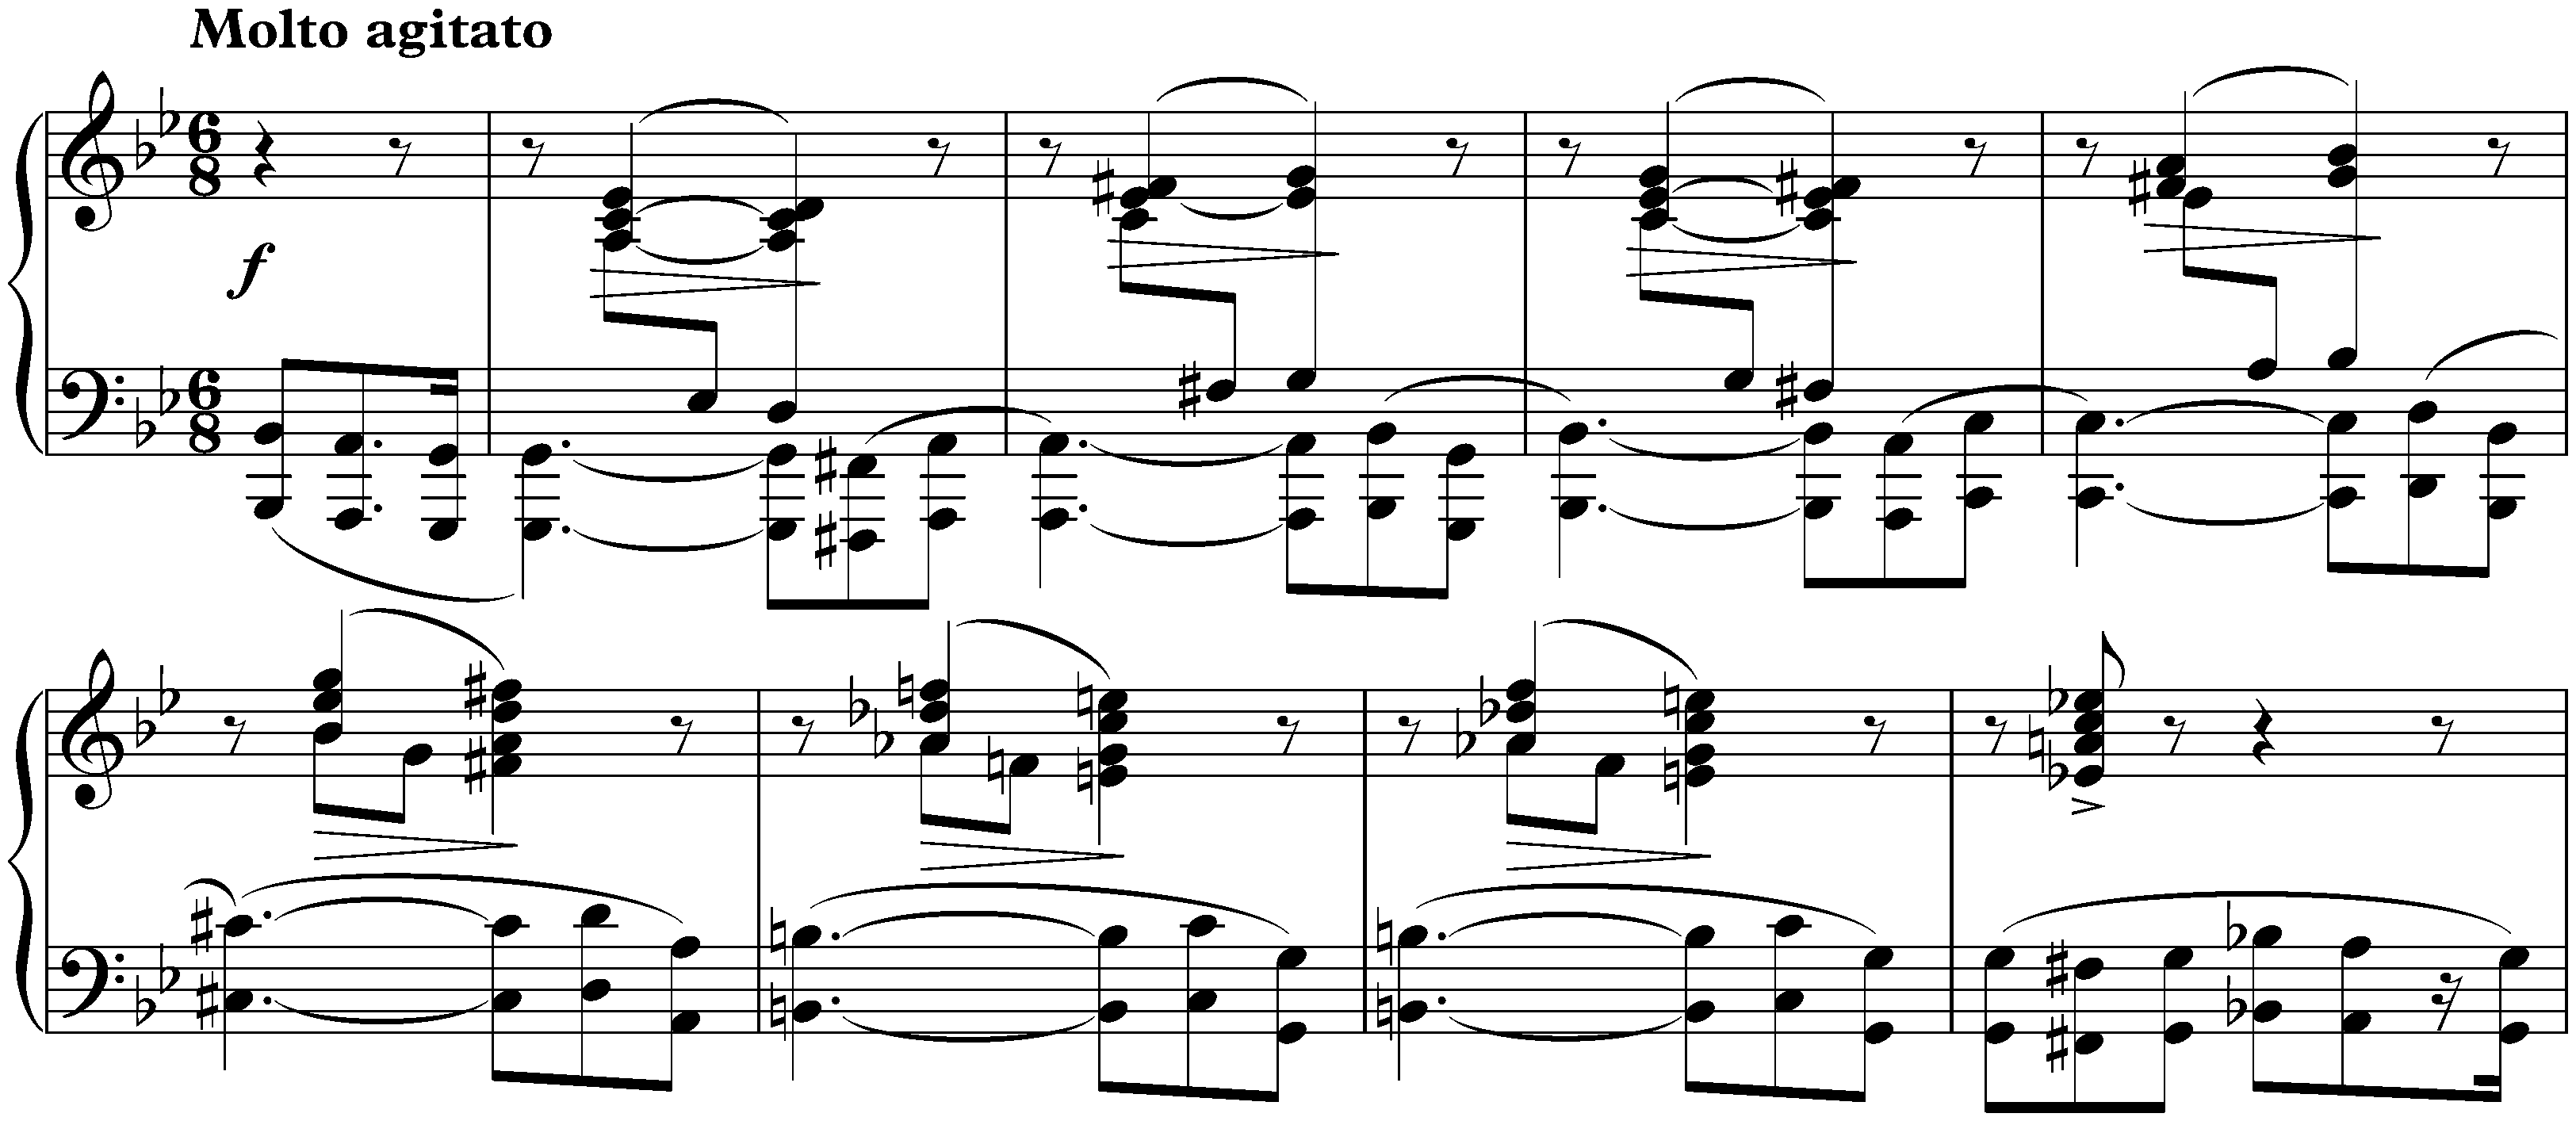 Twenty-four Préludes, op. 28; 22. G minor